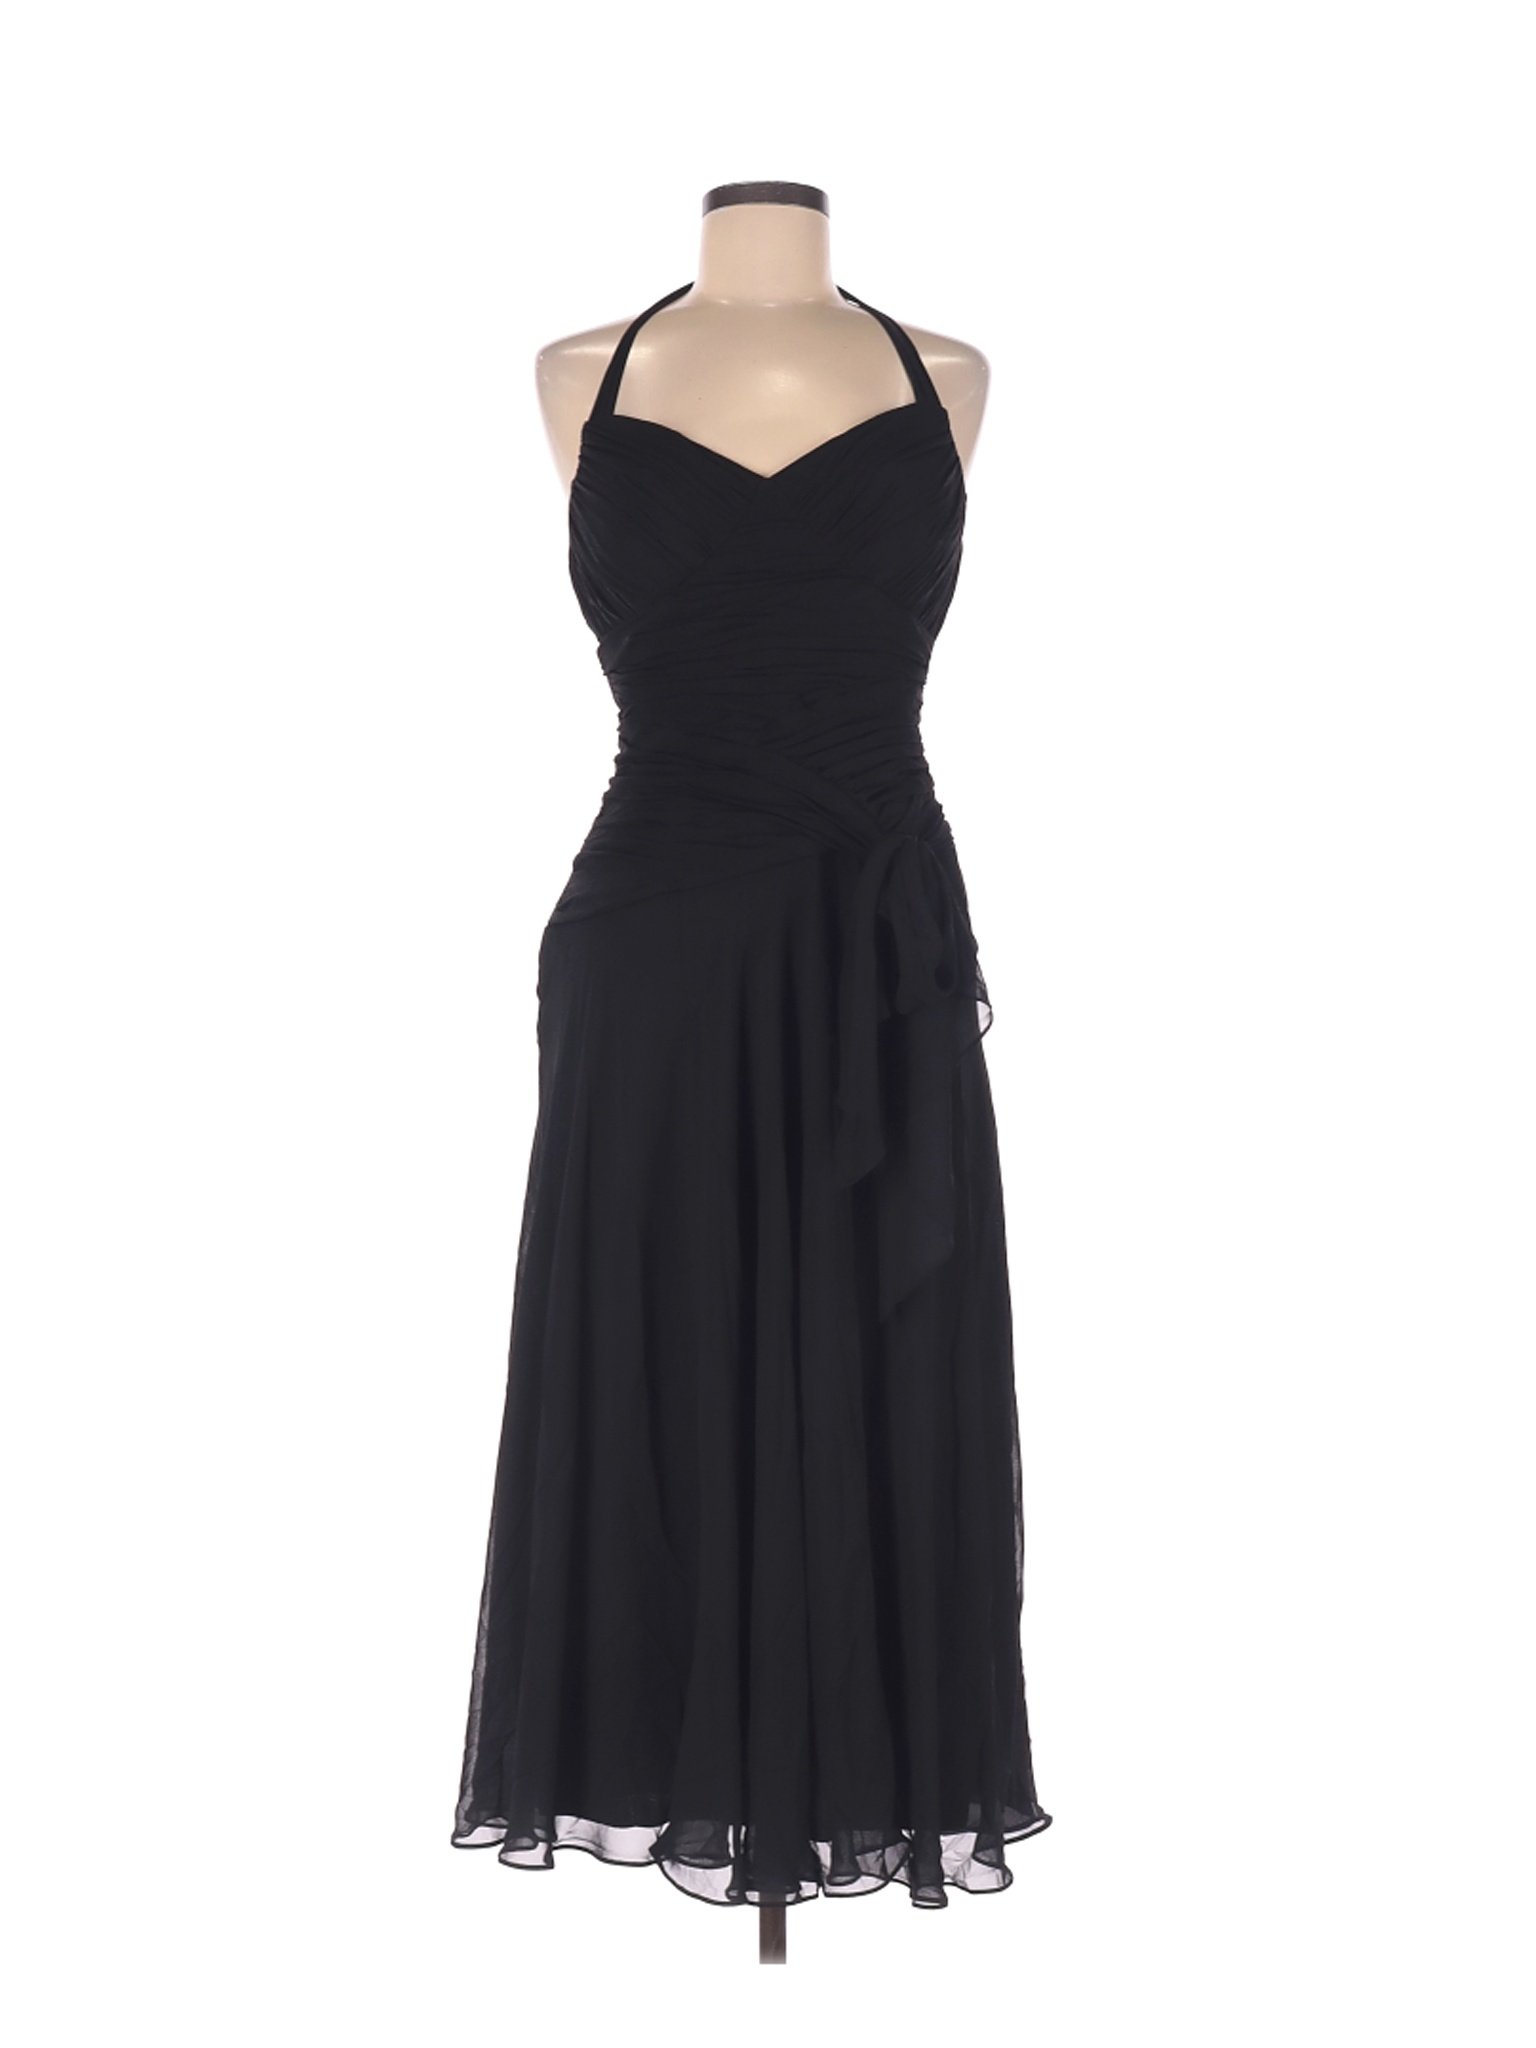 Sangria Women Black Cocktail Dress 8 | eBay